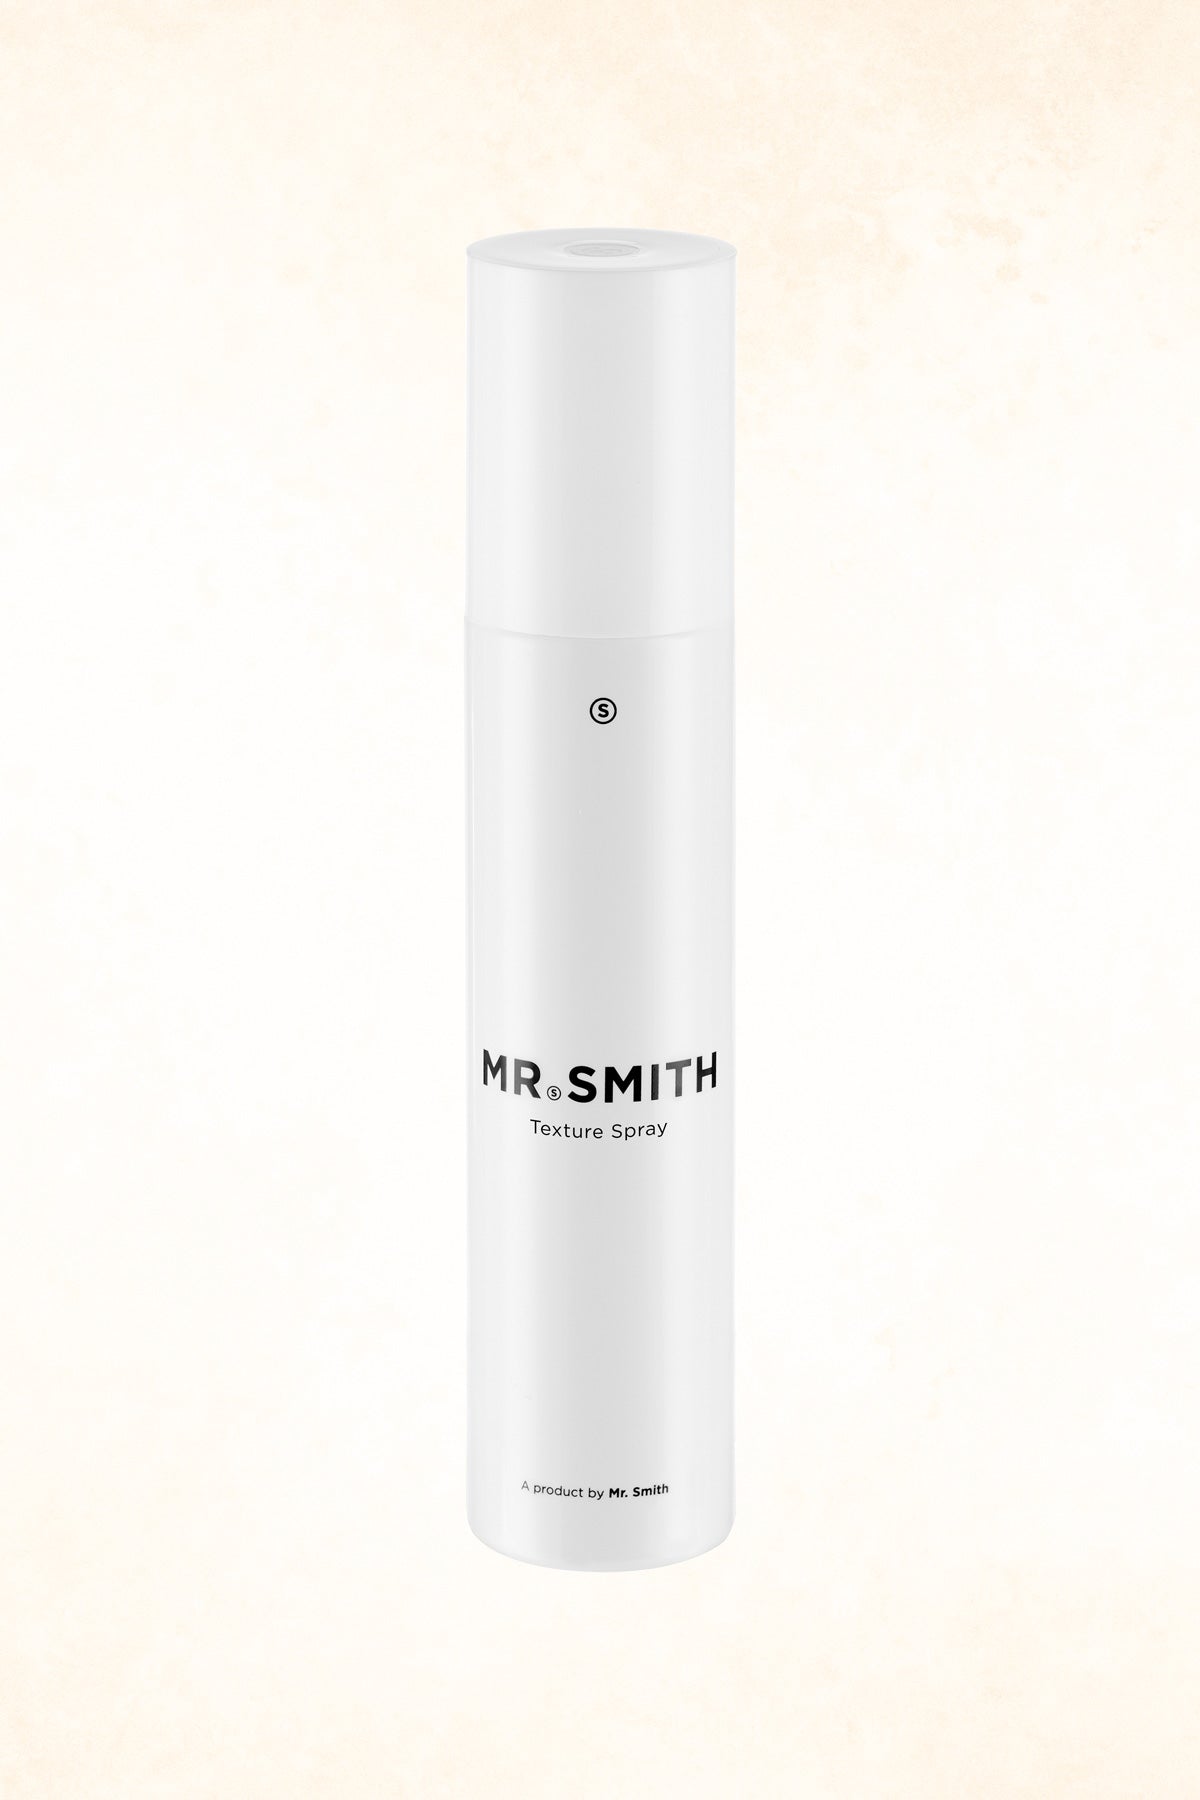 Mr Smith – Texture Spray – 200 g